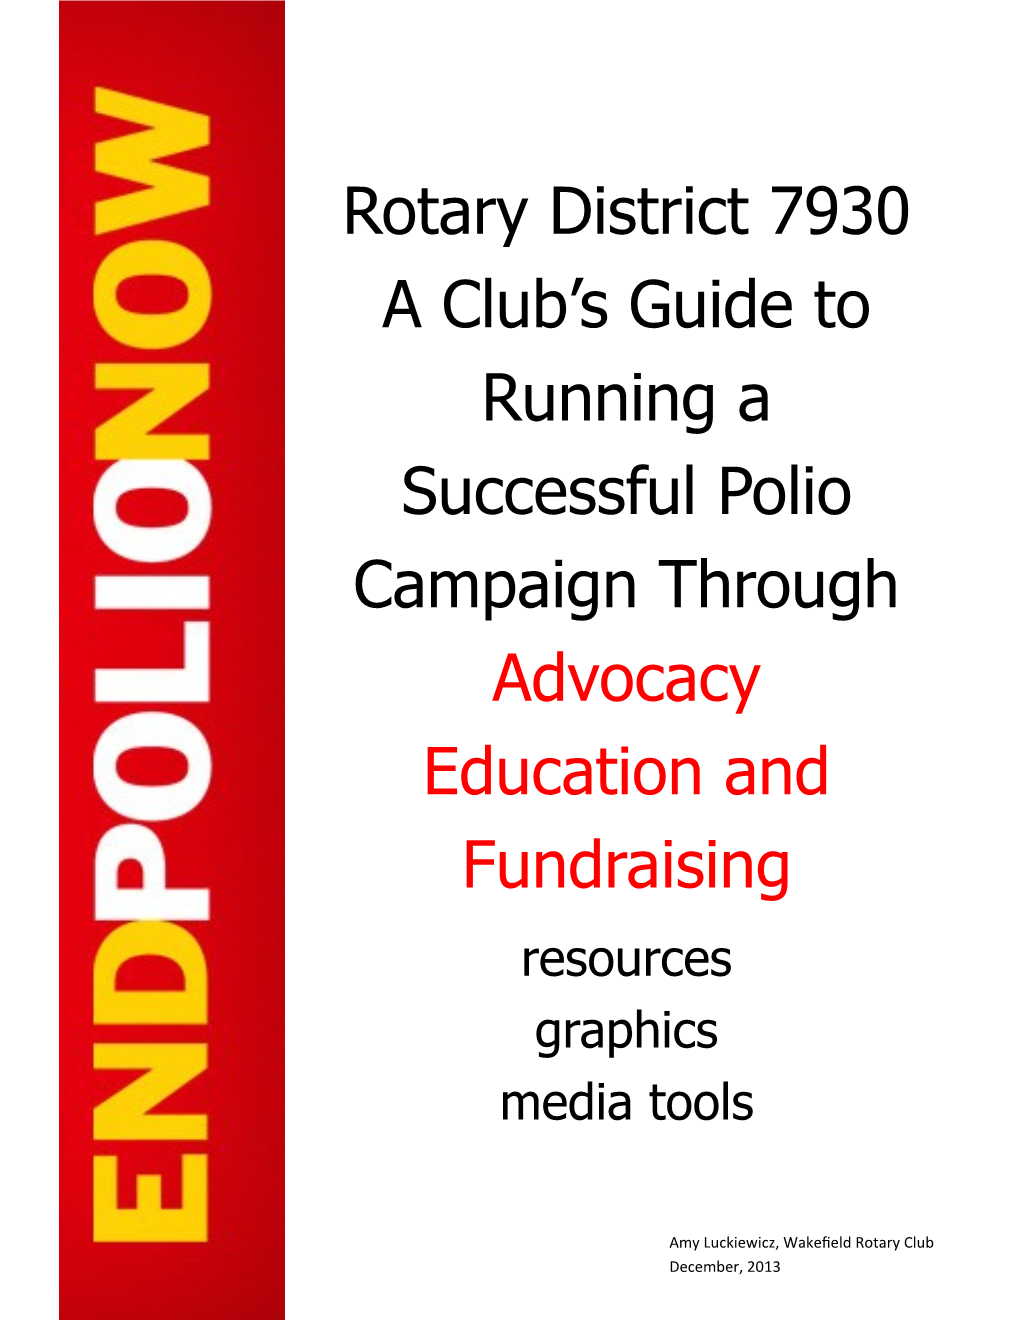 End Polio Now Guidebook